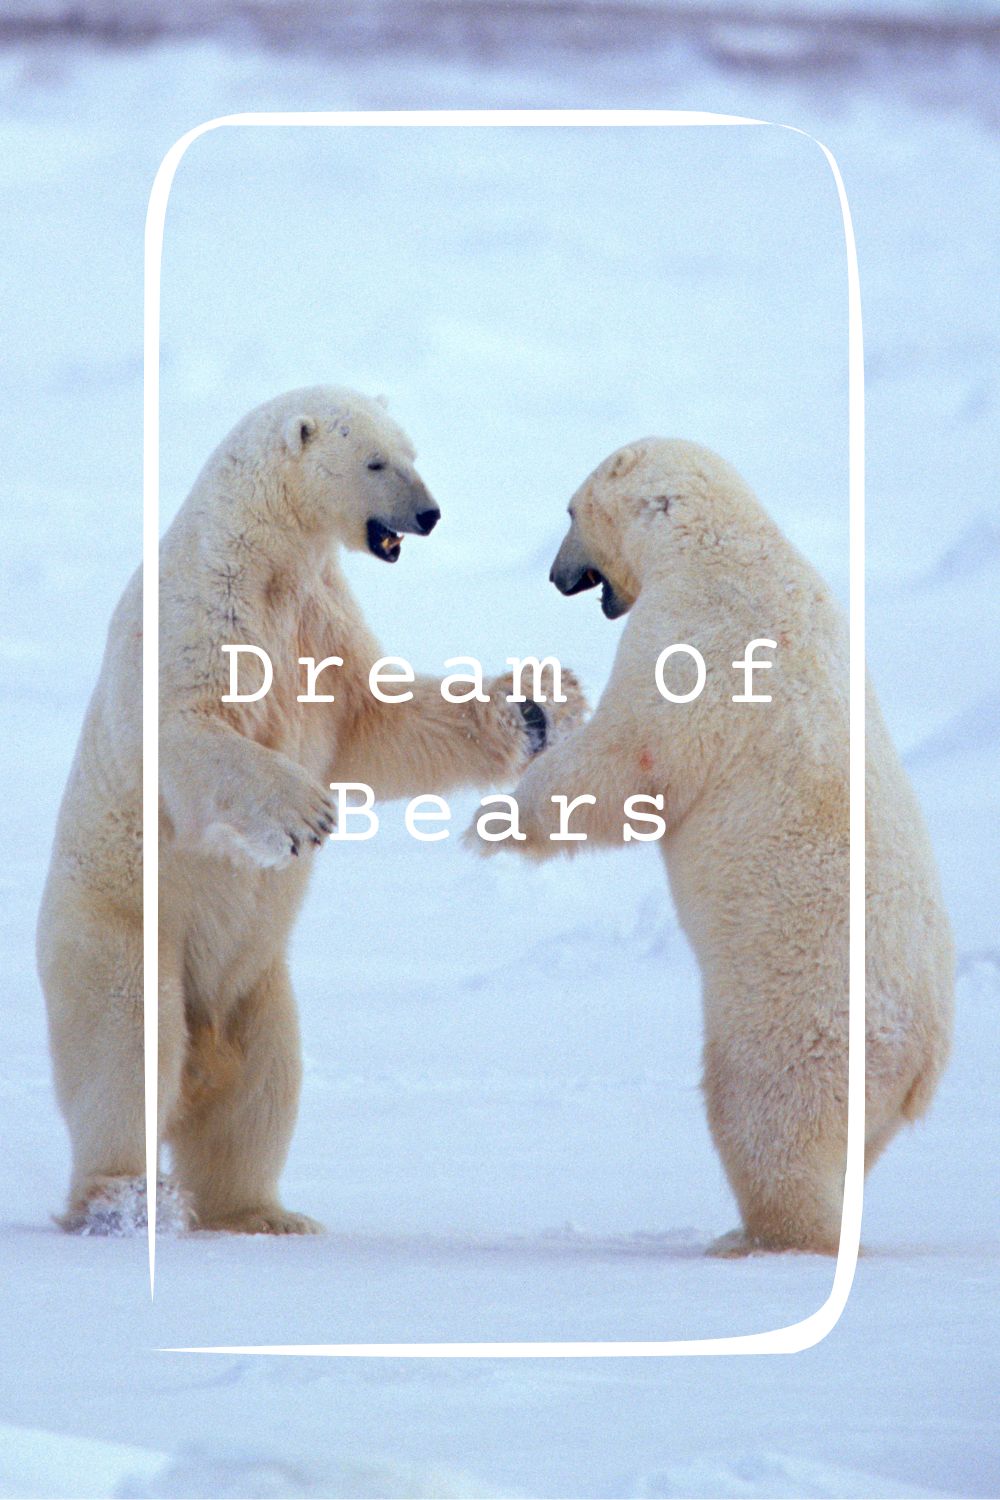 Dream Of Bears Meanings 2